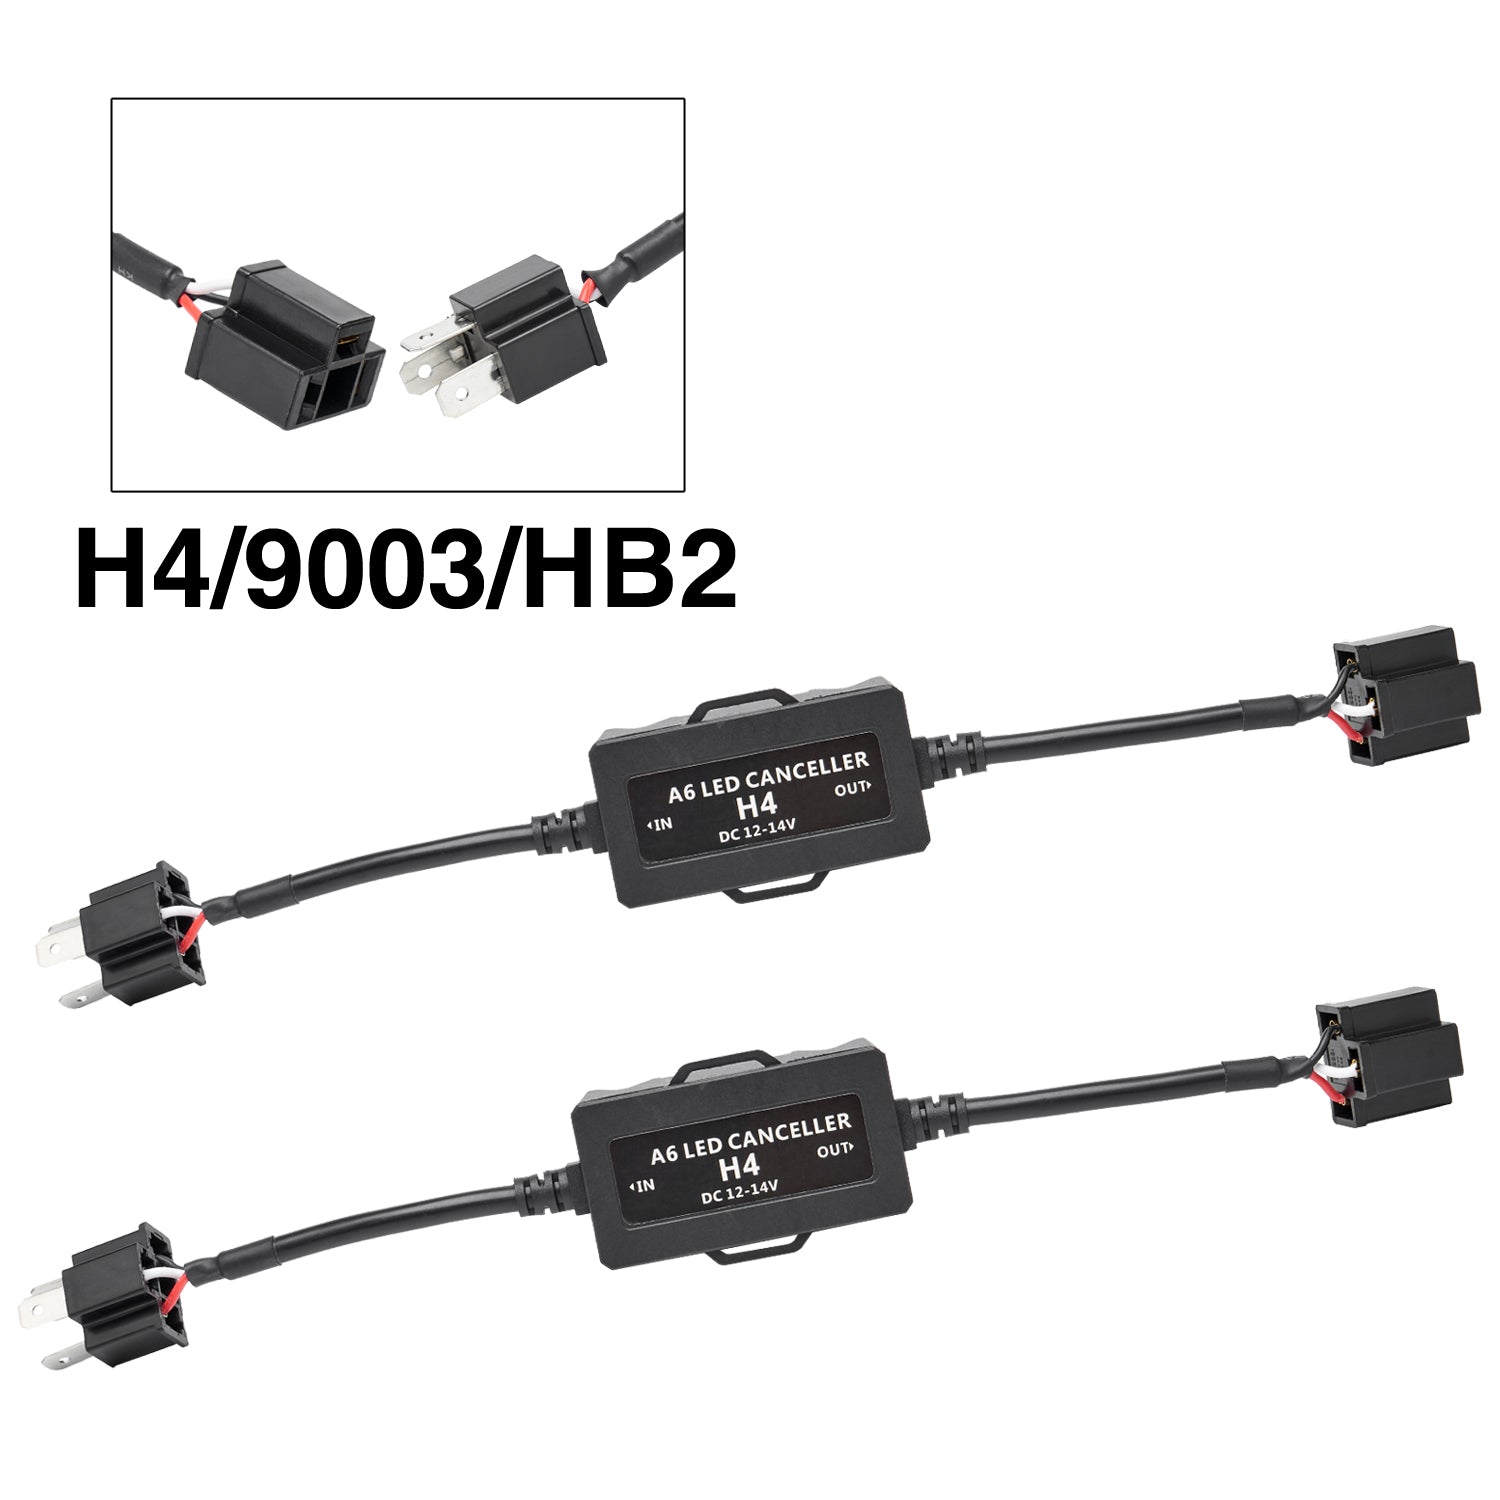 2Pcs H7 LED Decoder Adapter Anti Hyper Blink Flash Error Cancel Canbus  Headlight Decoder Canceller Car